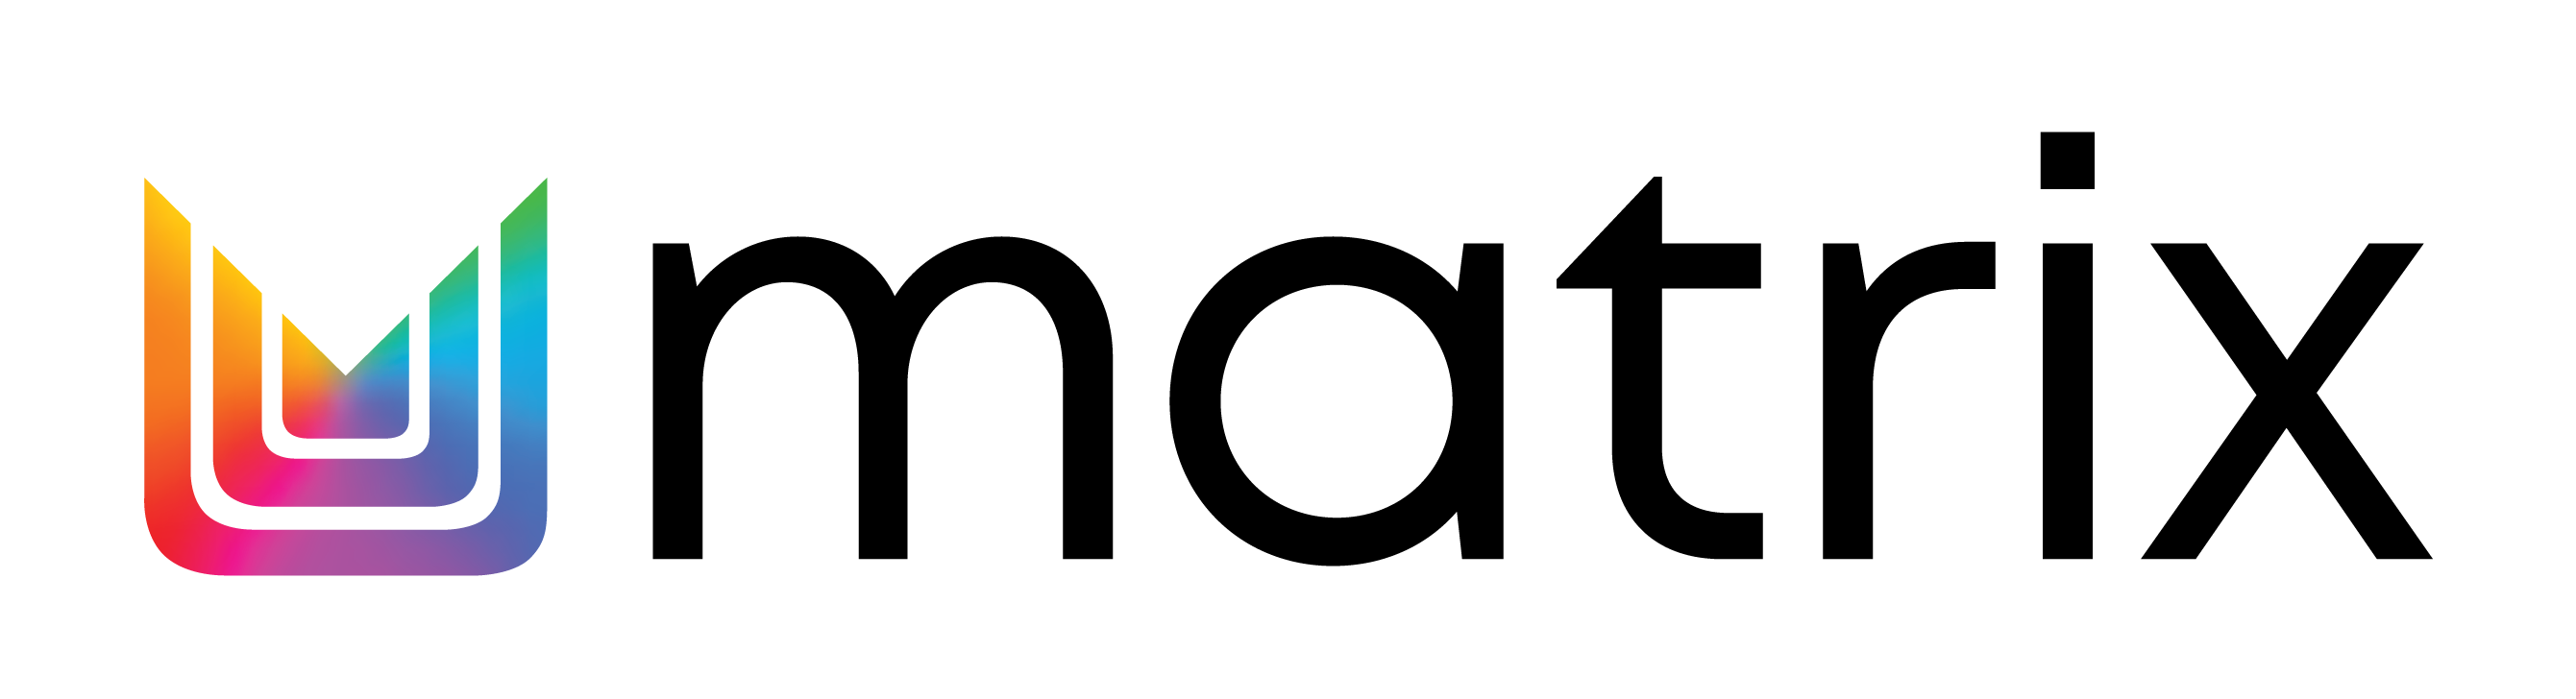 Косметика бренда MATRIX, логотип